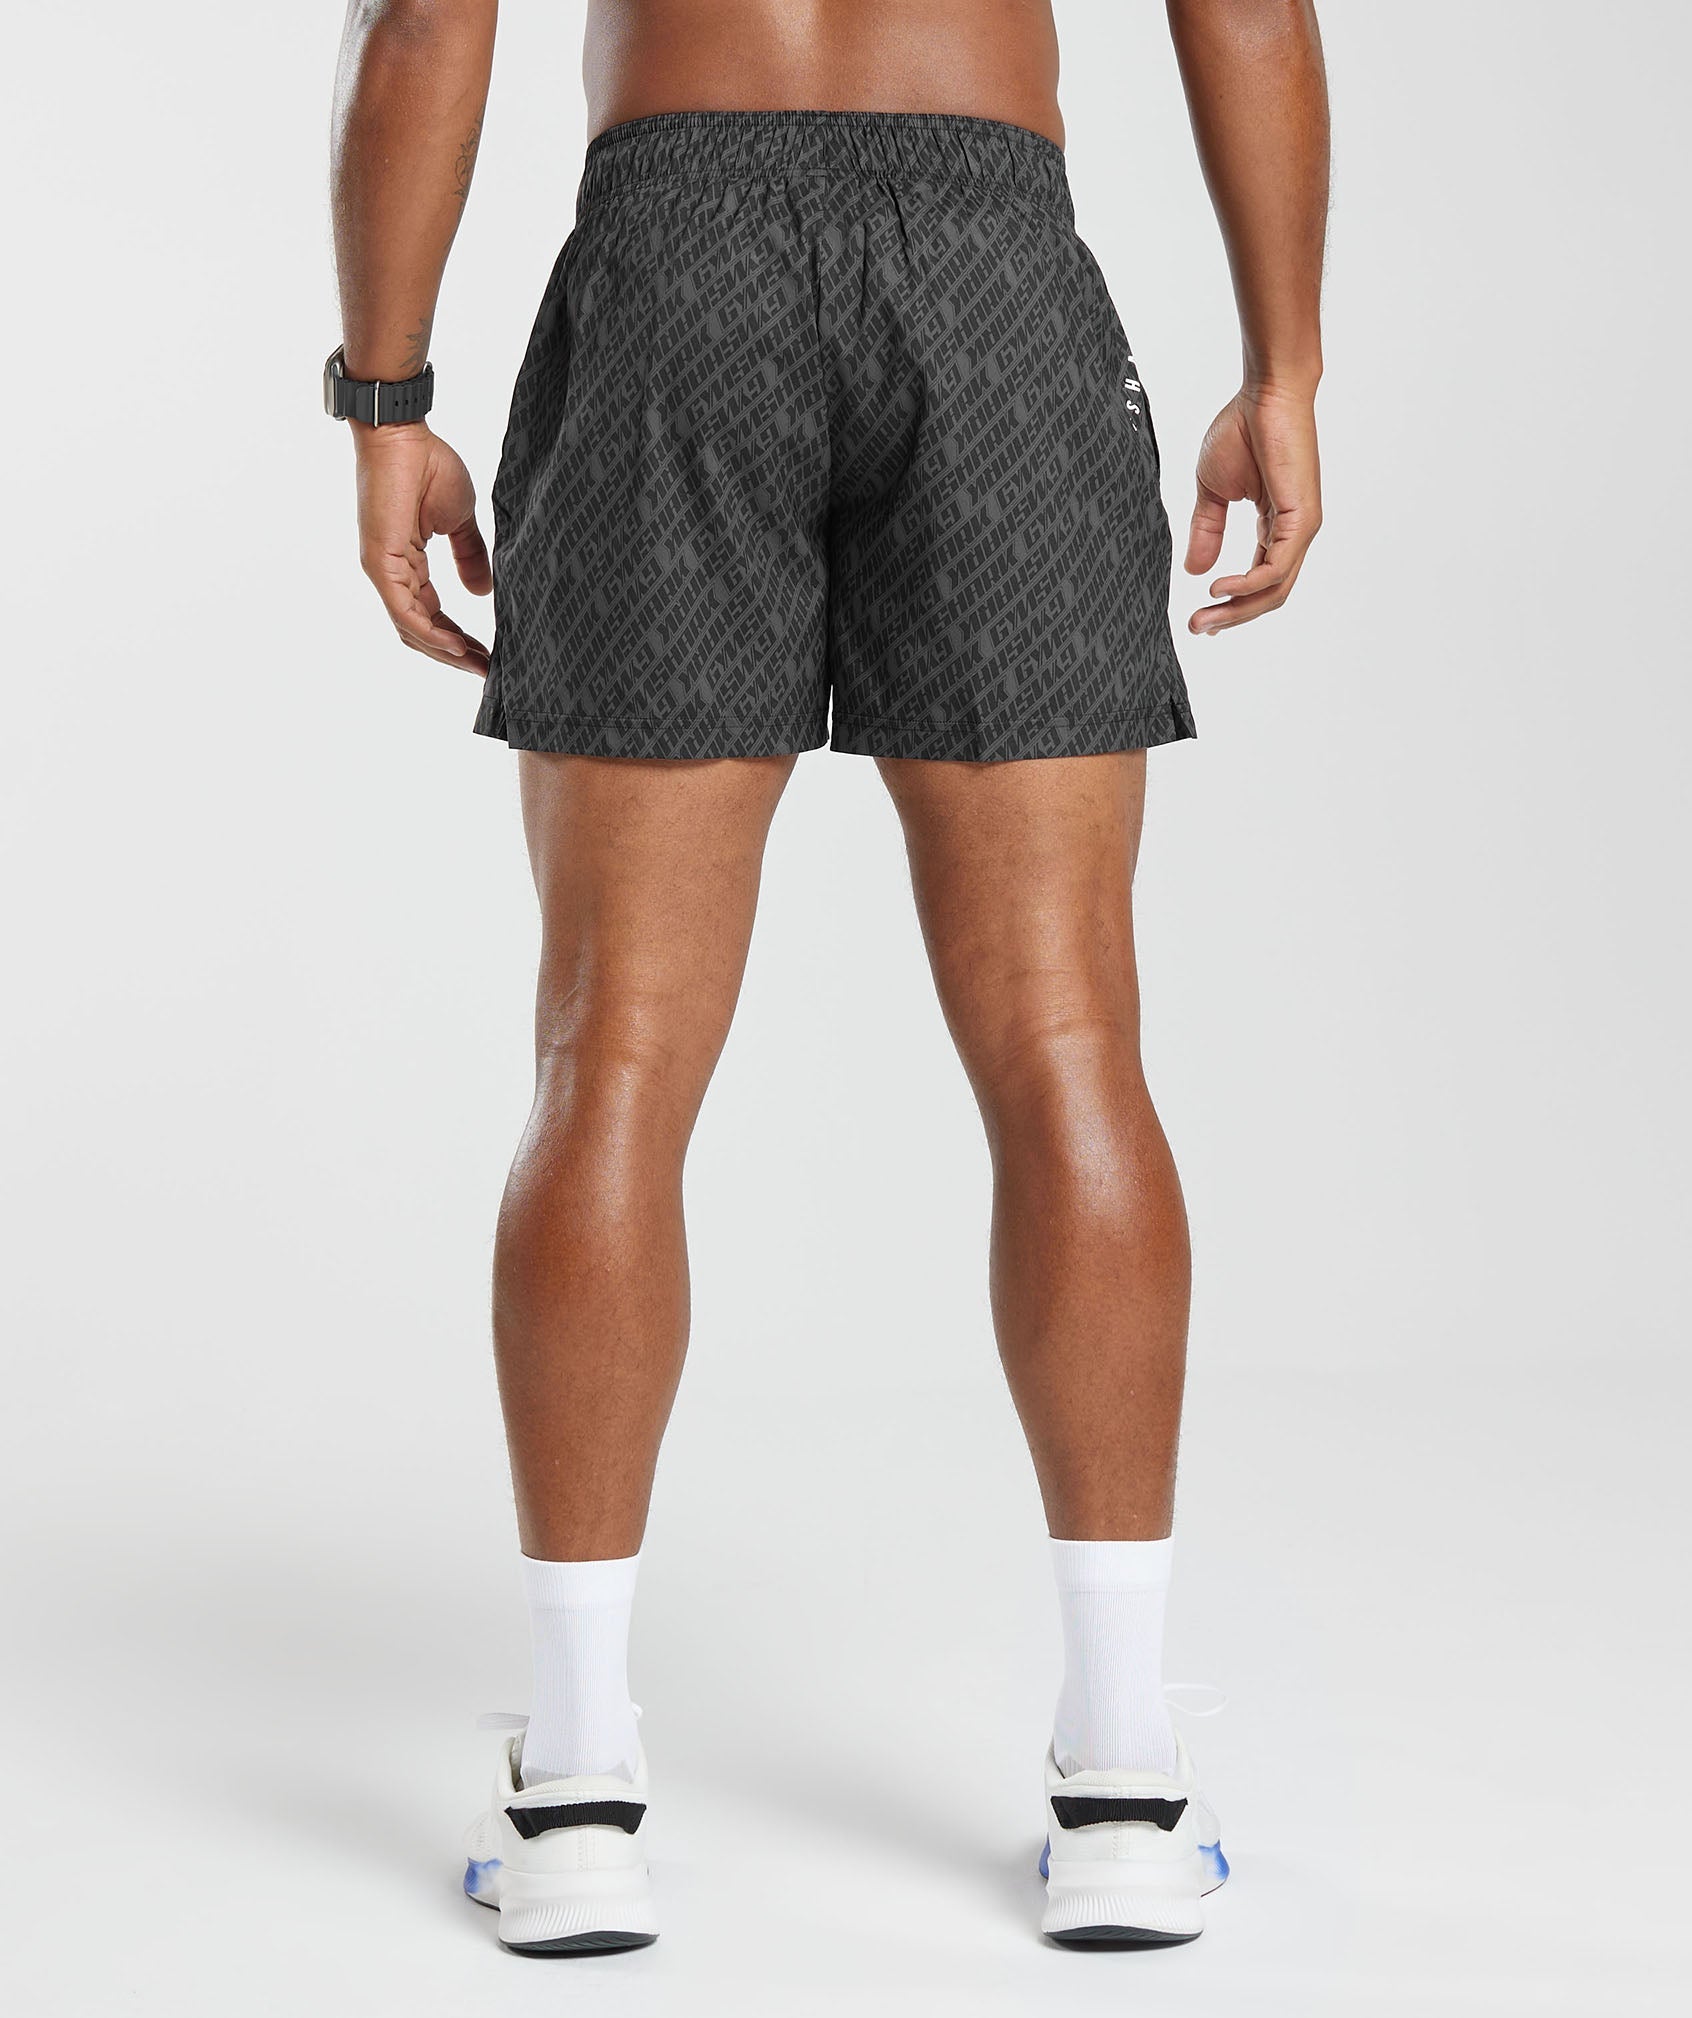 Sport 5" Shorts in Asphalt Grey - view 2